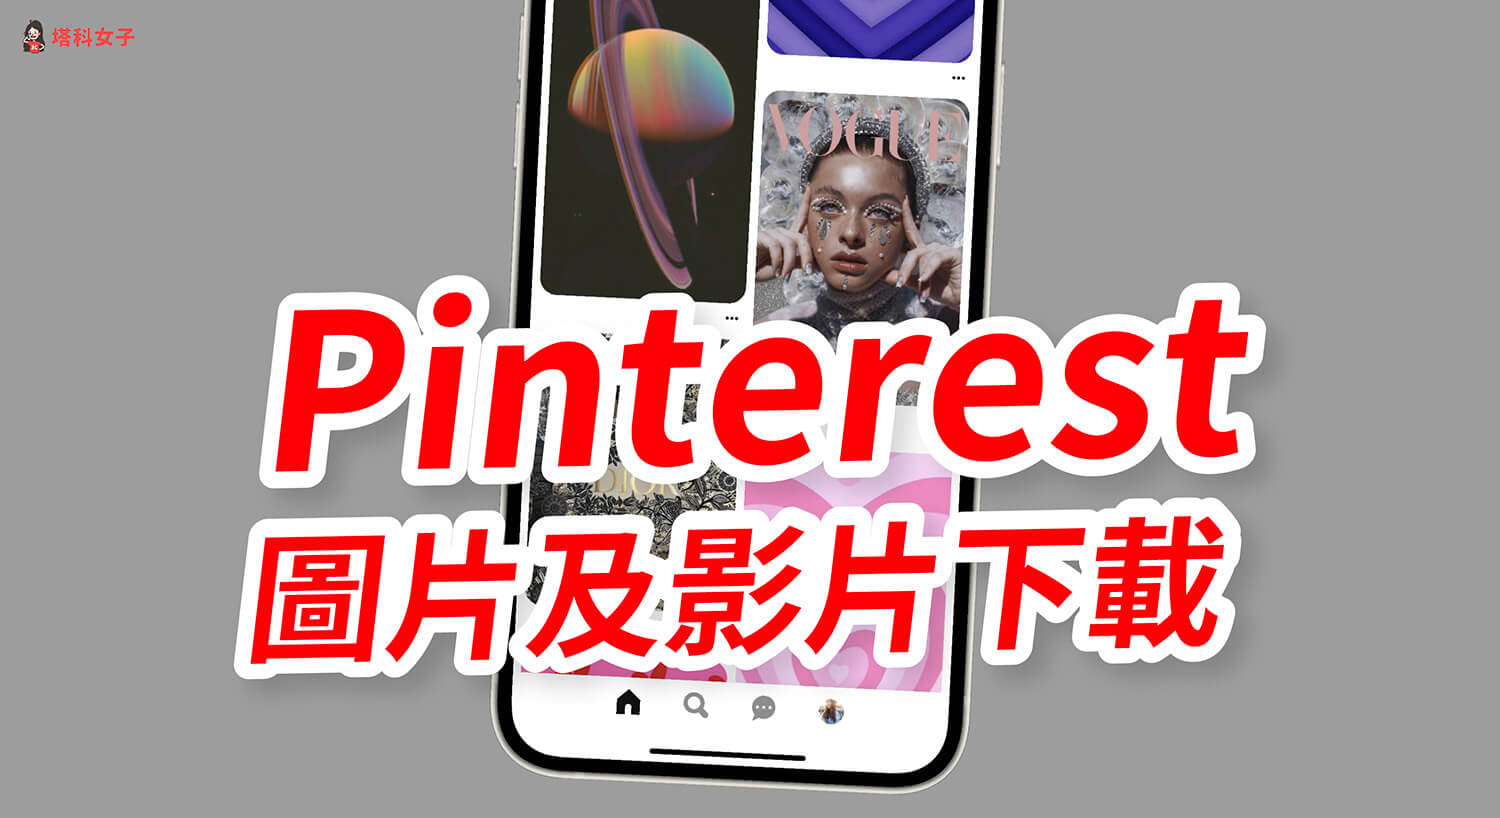 Pinterest下載教學，在 iOS / Android 下載 Pinterest 影片及圖片